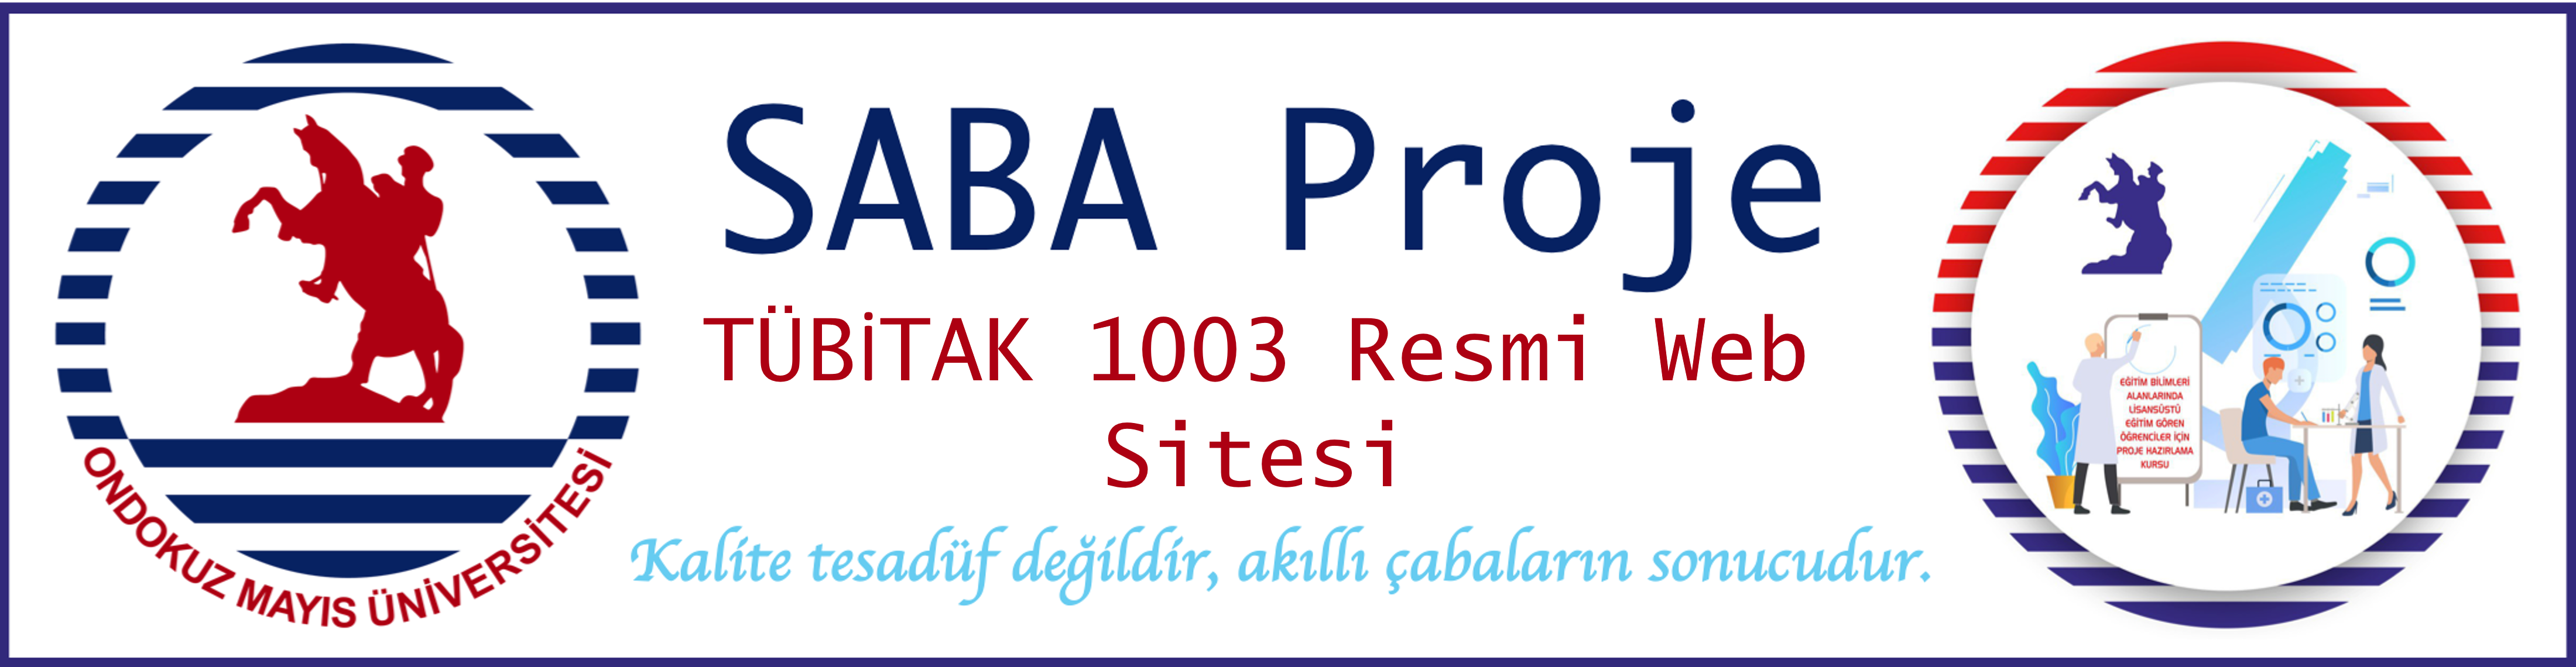 Saba Proje 1003